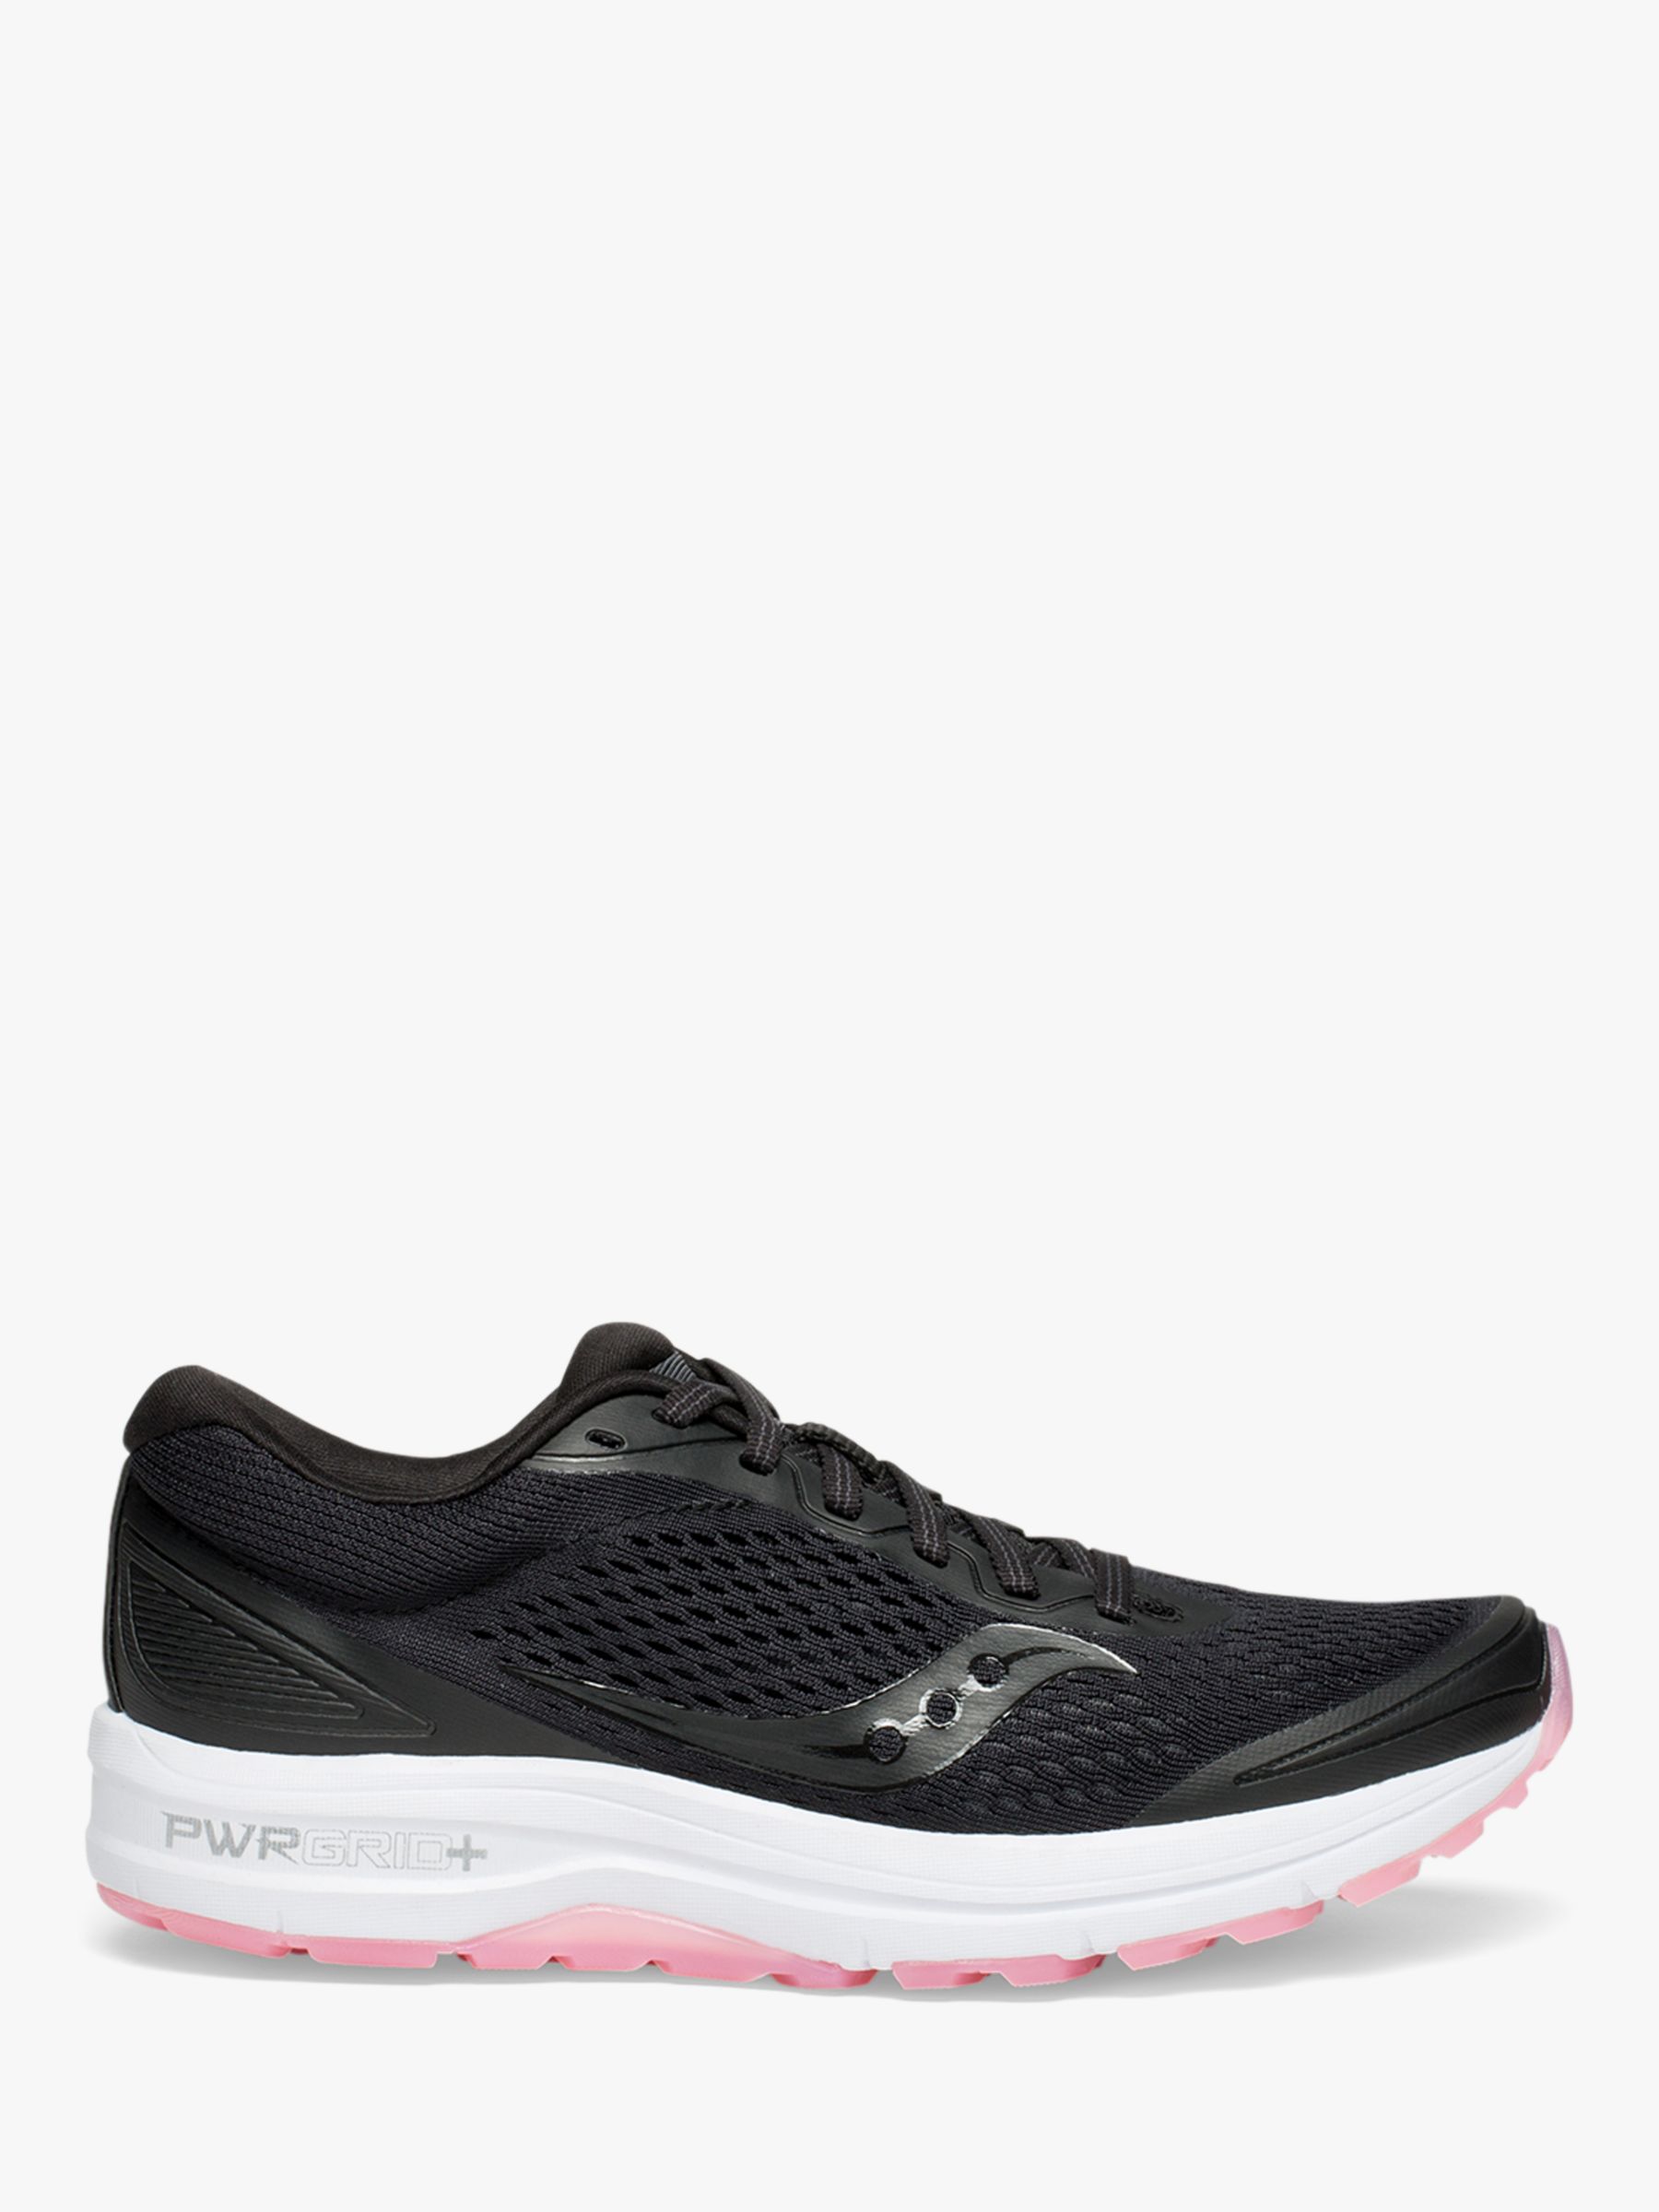 black saucony women's running shoes